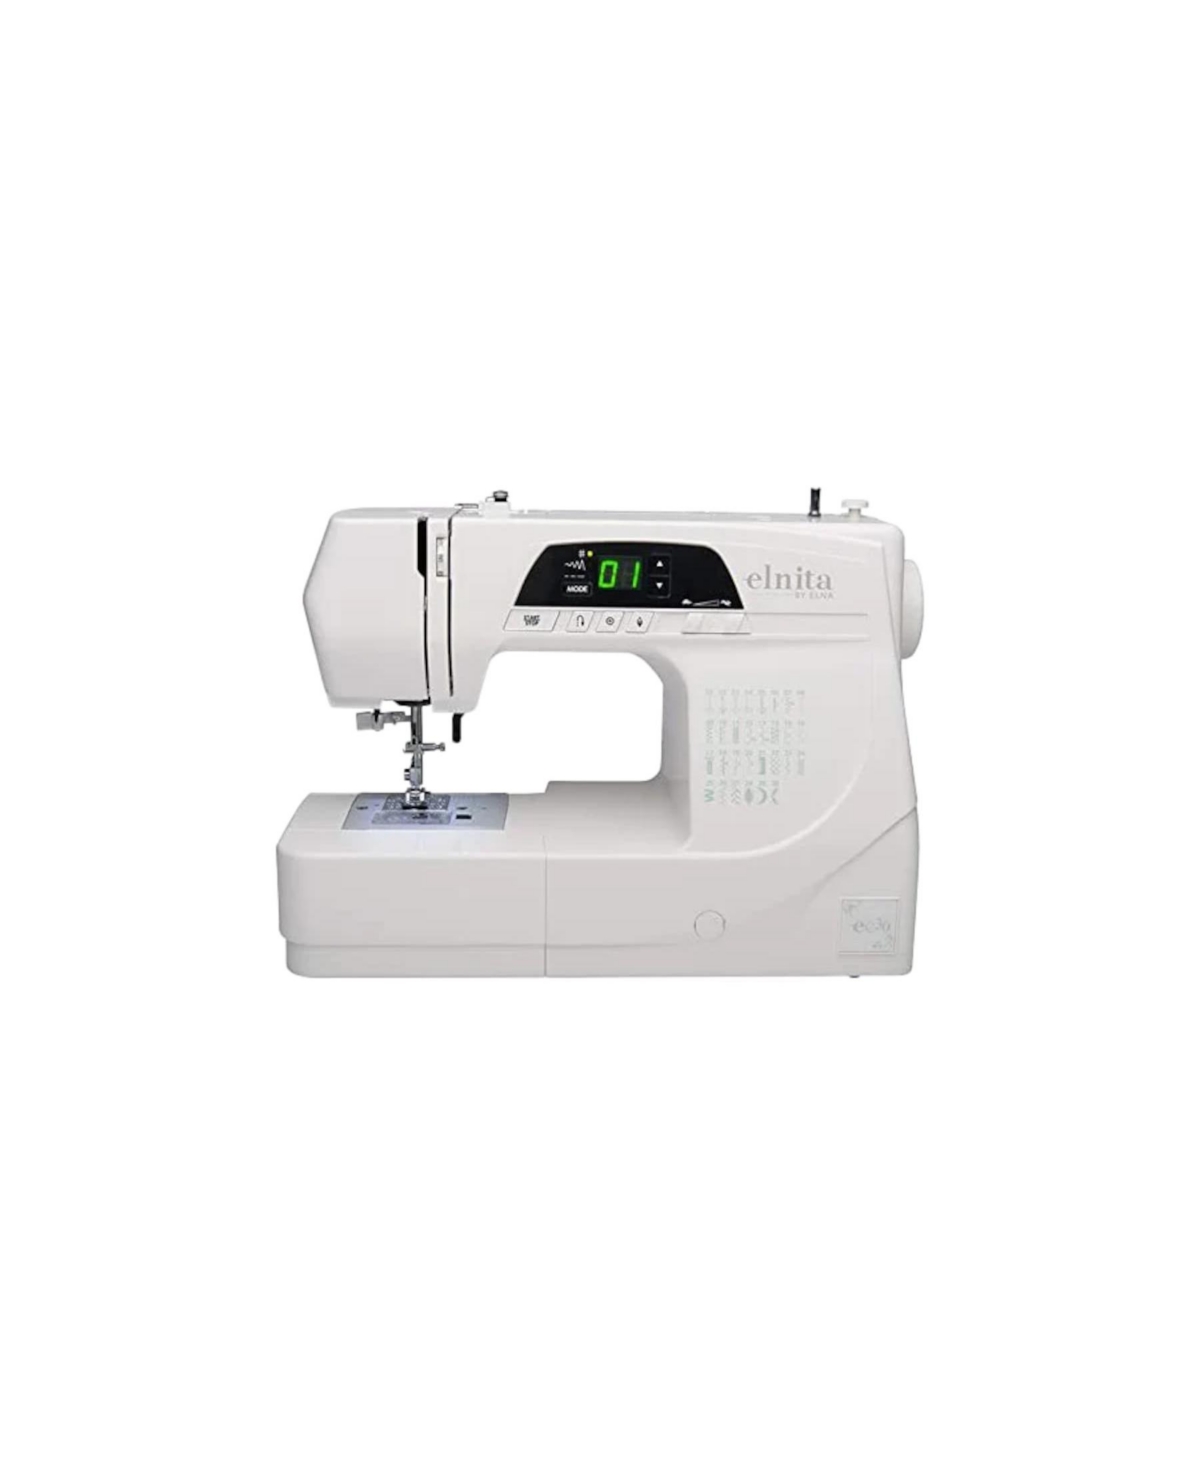 Elnita Sewing Machine - White